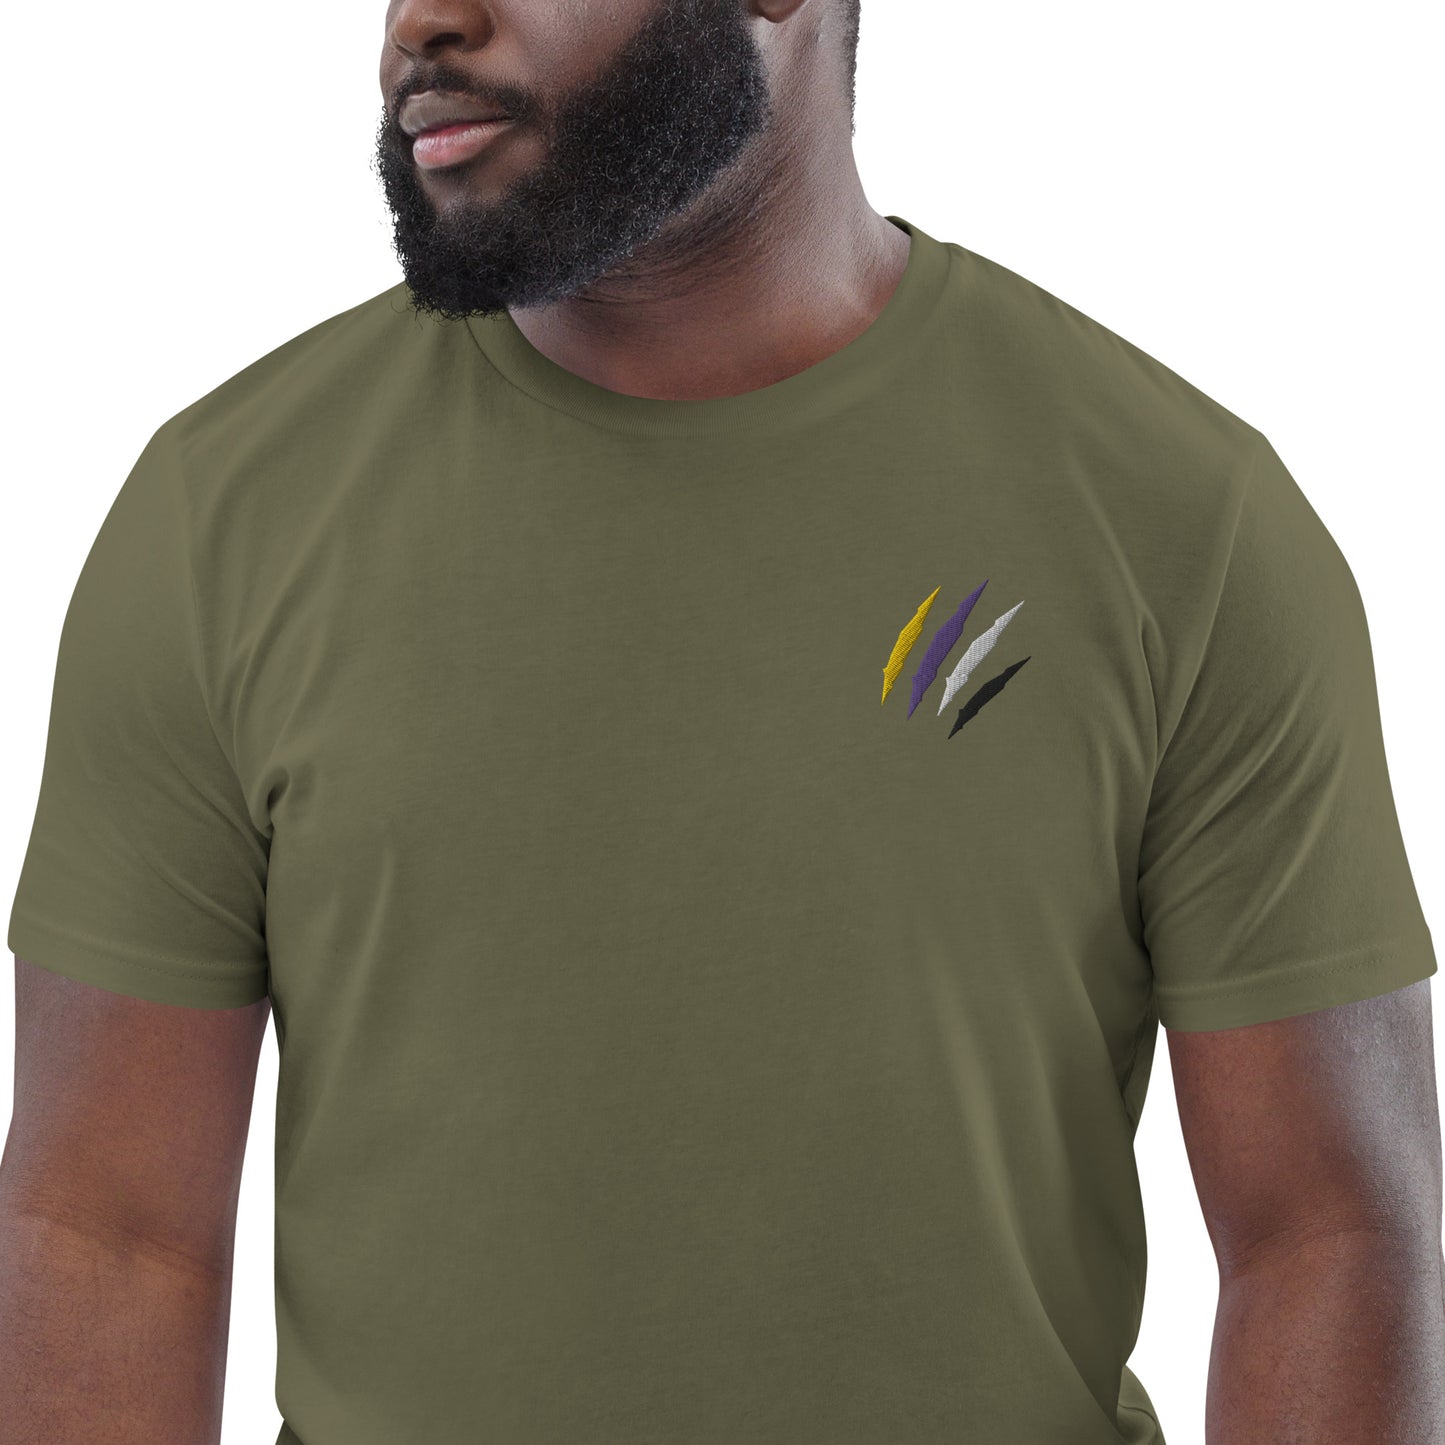 T-shirt en coton biologique : marque non binaire